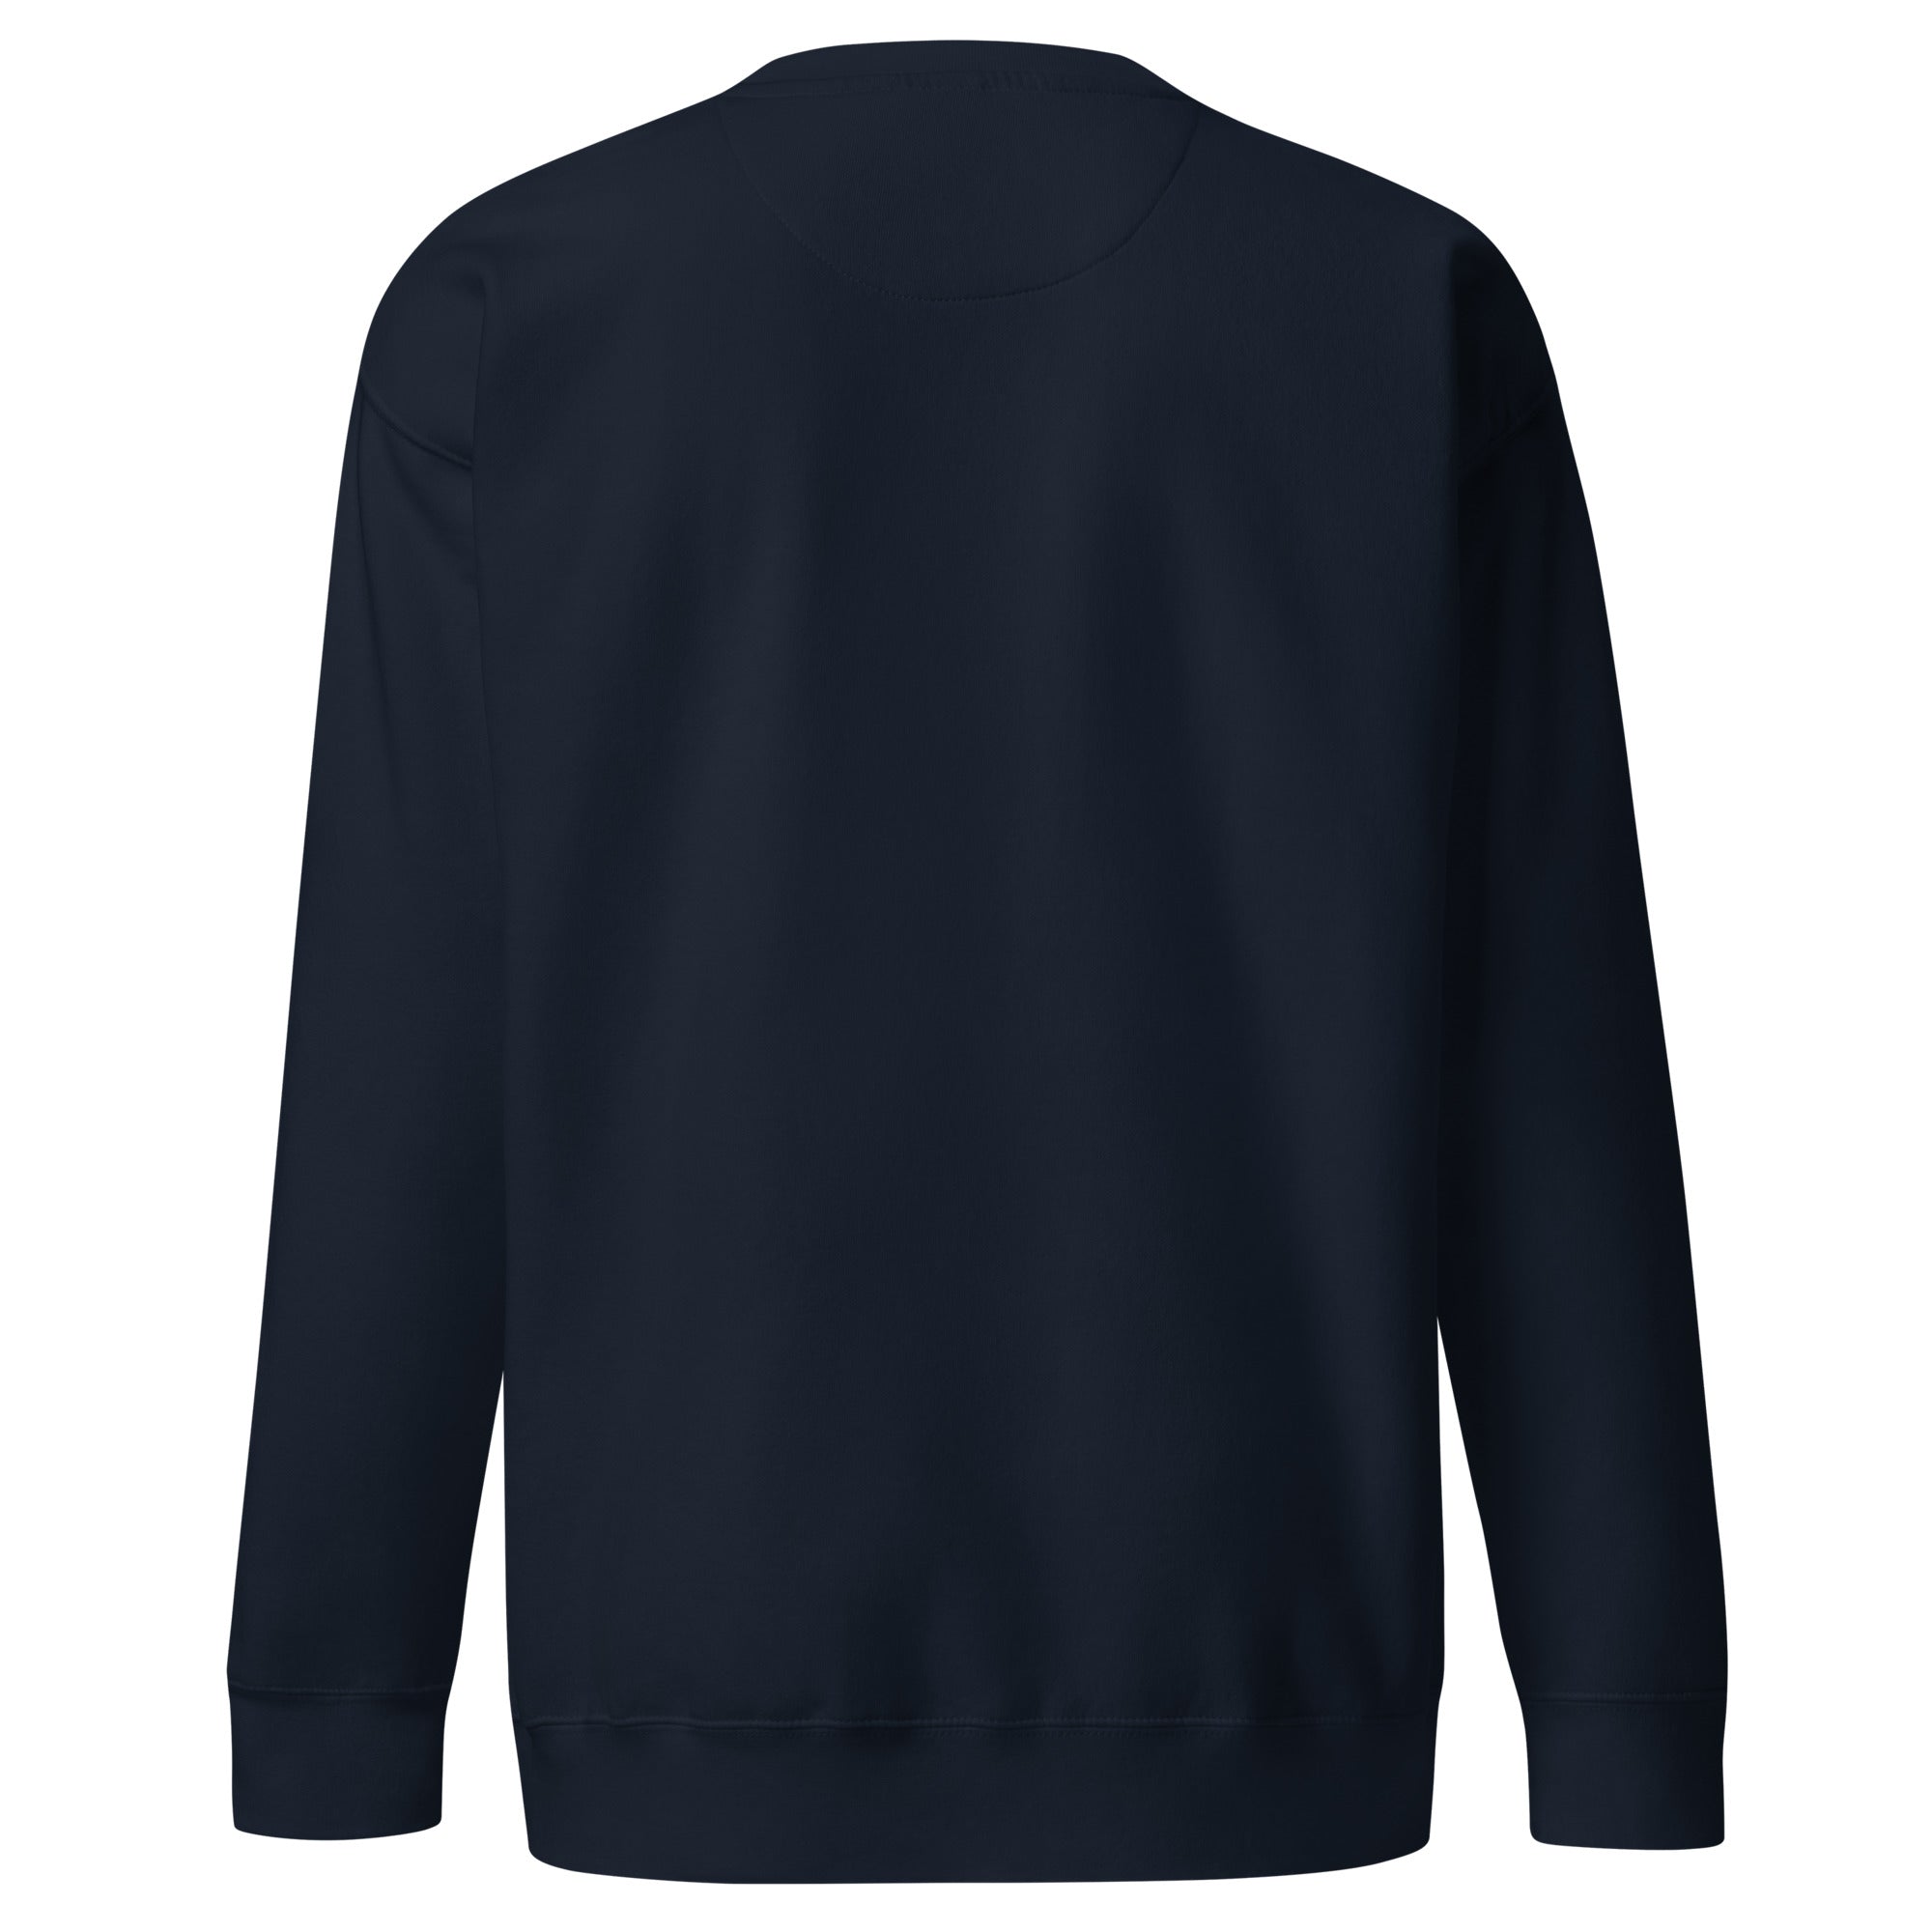 PAIN Cloud Embroidered Premium Crewneck Sweatshirt